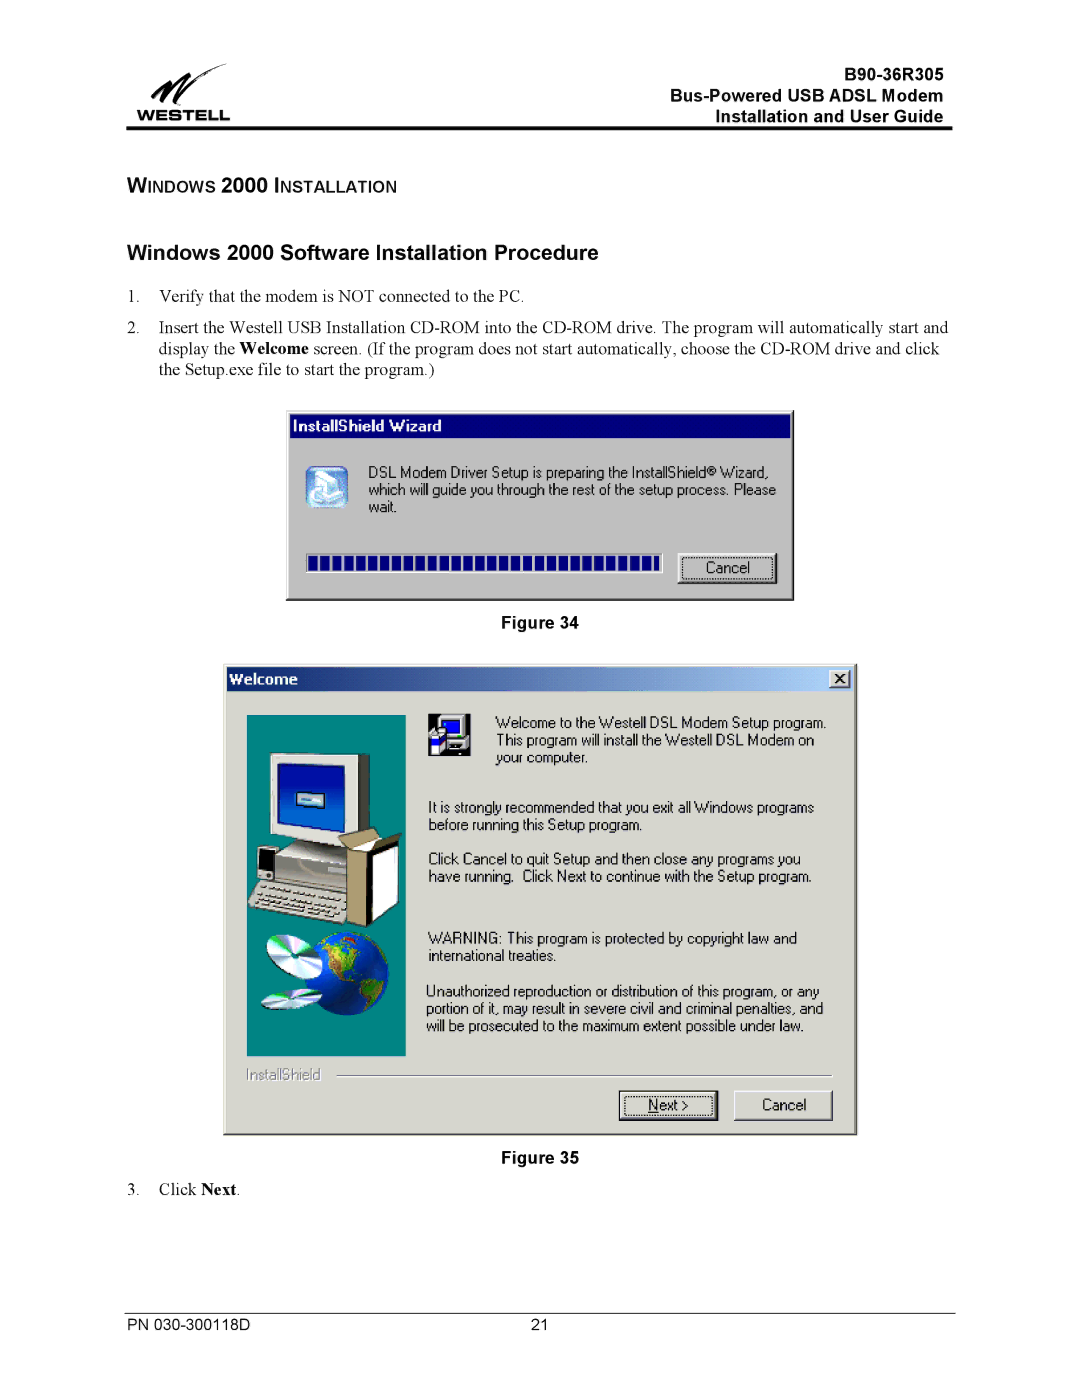 Westell Technologies B90-36R305 manual Windows 2000 Software Installation Procedure, Windows 2000 Installation 